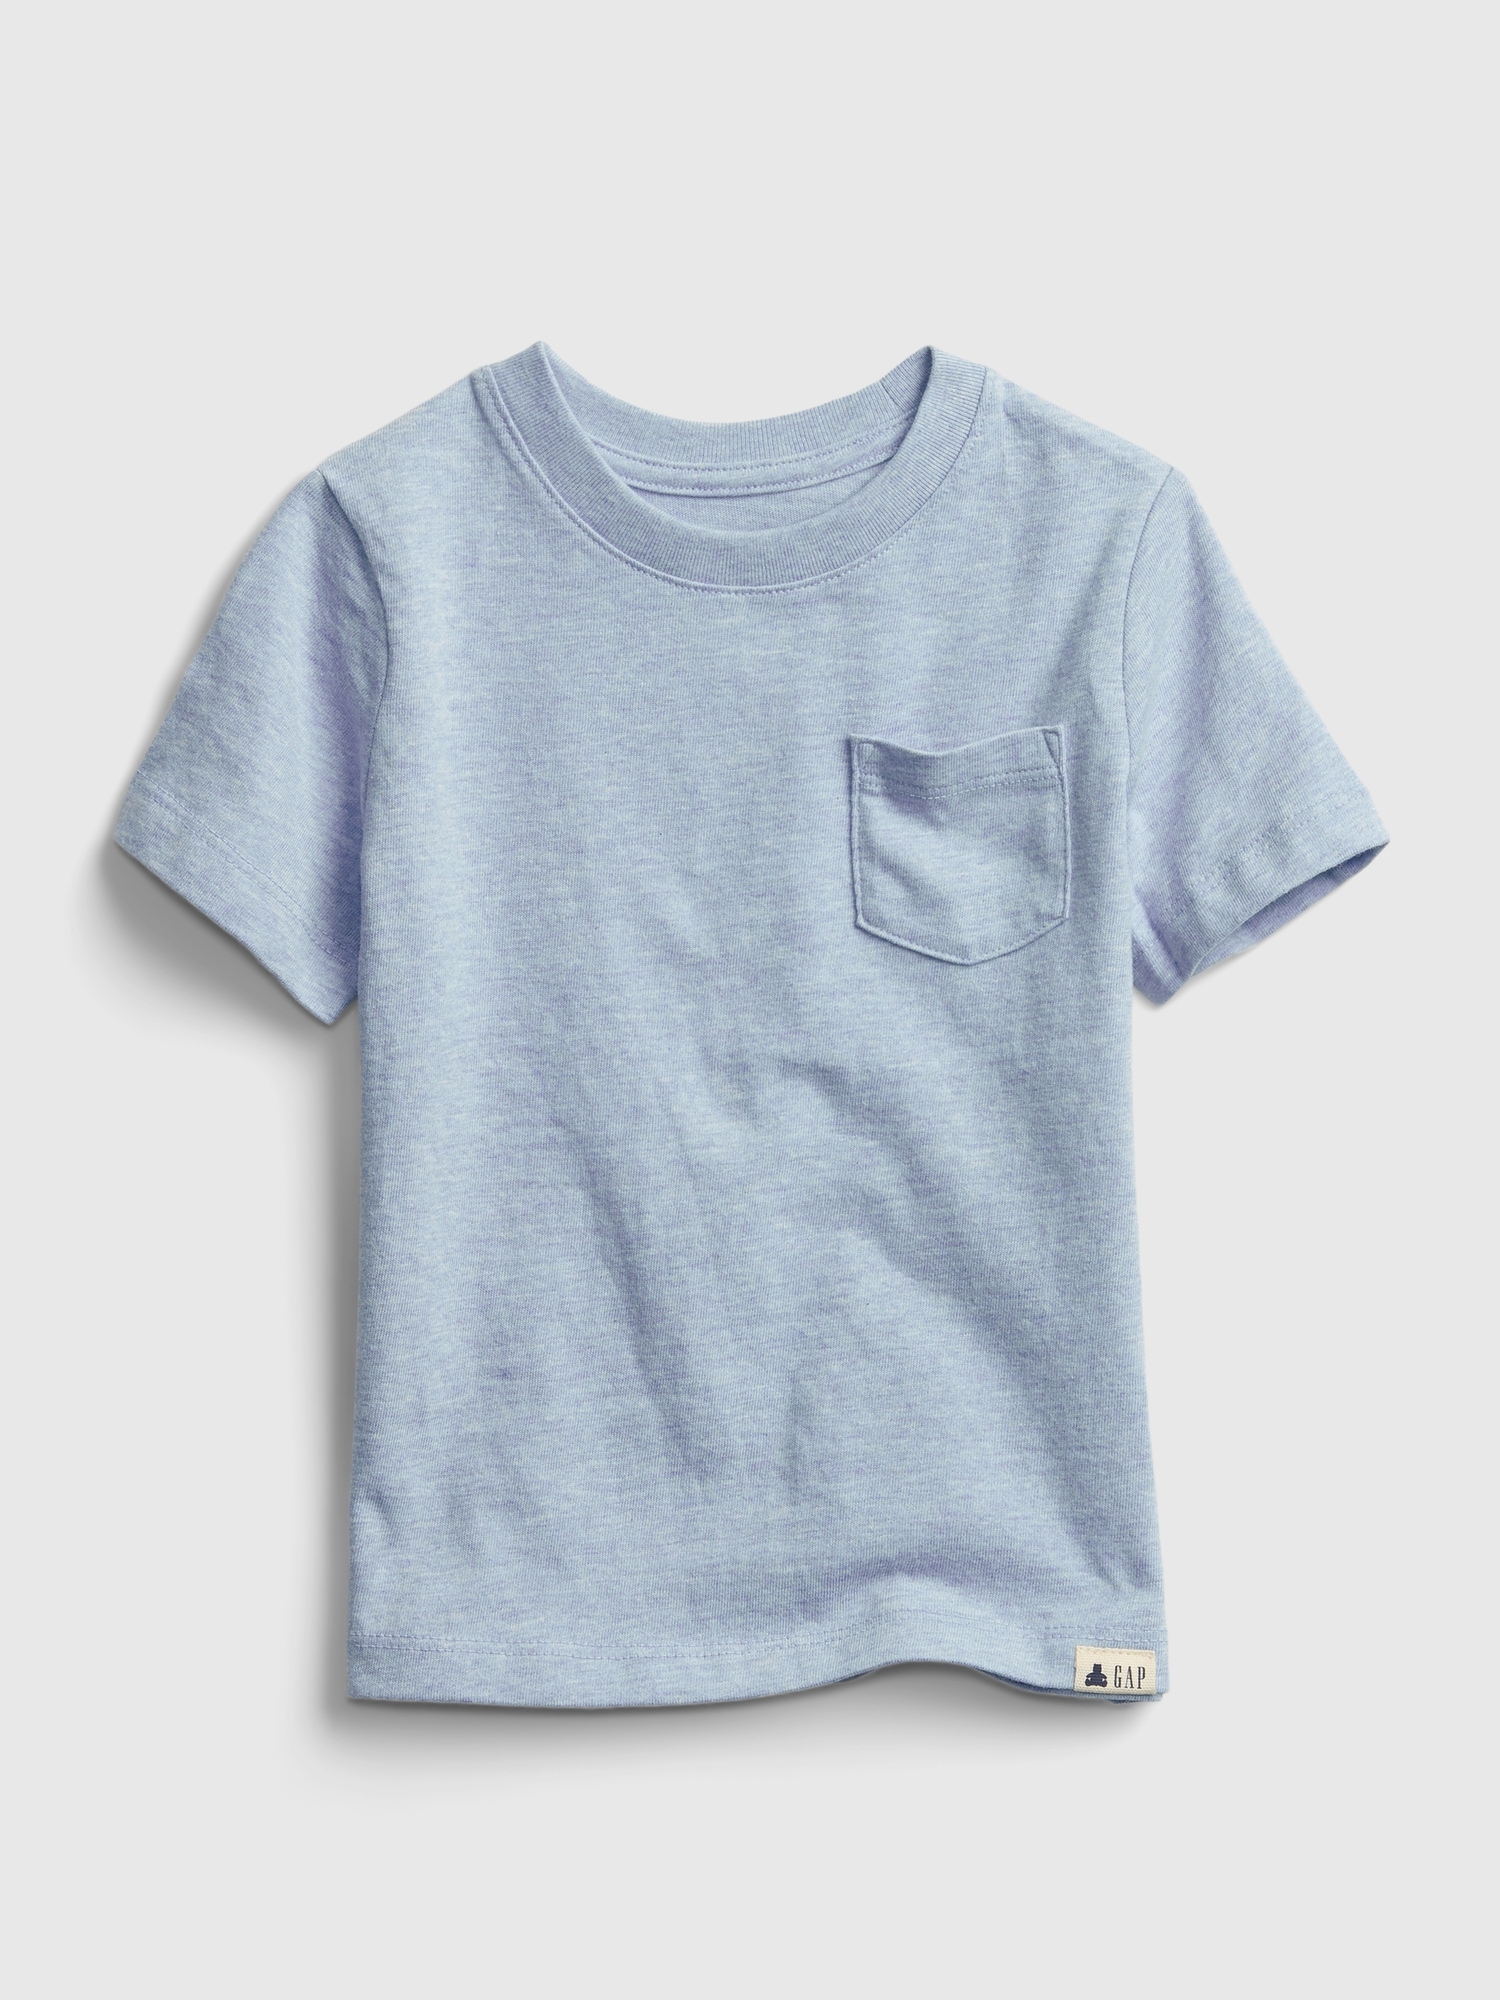 Gap Toddler Mix and Match Pocket T-Shirt